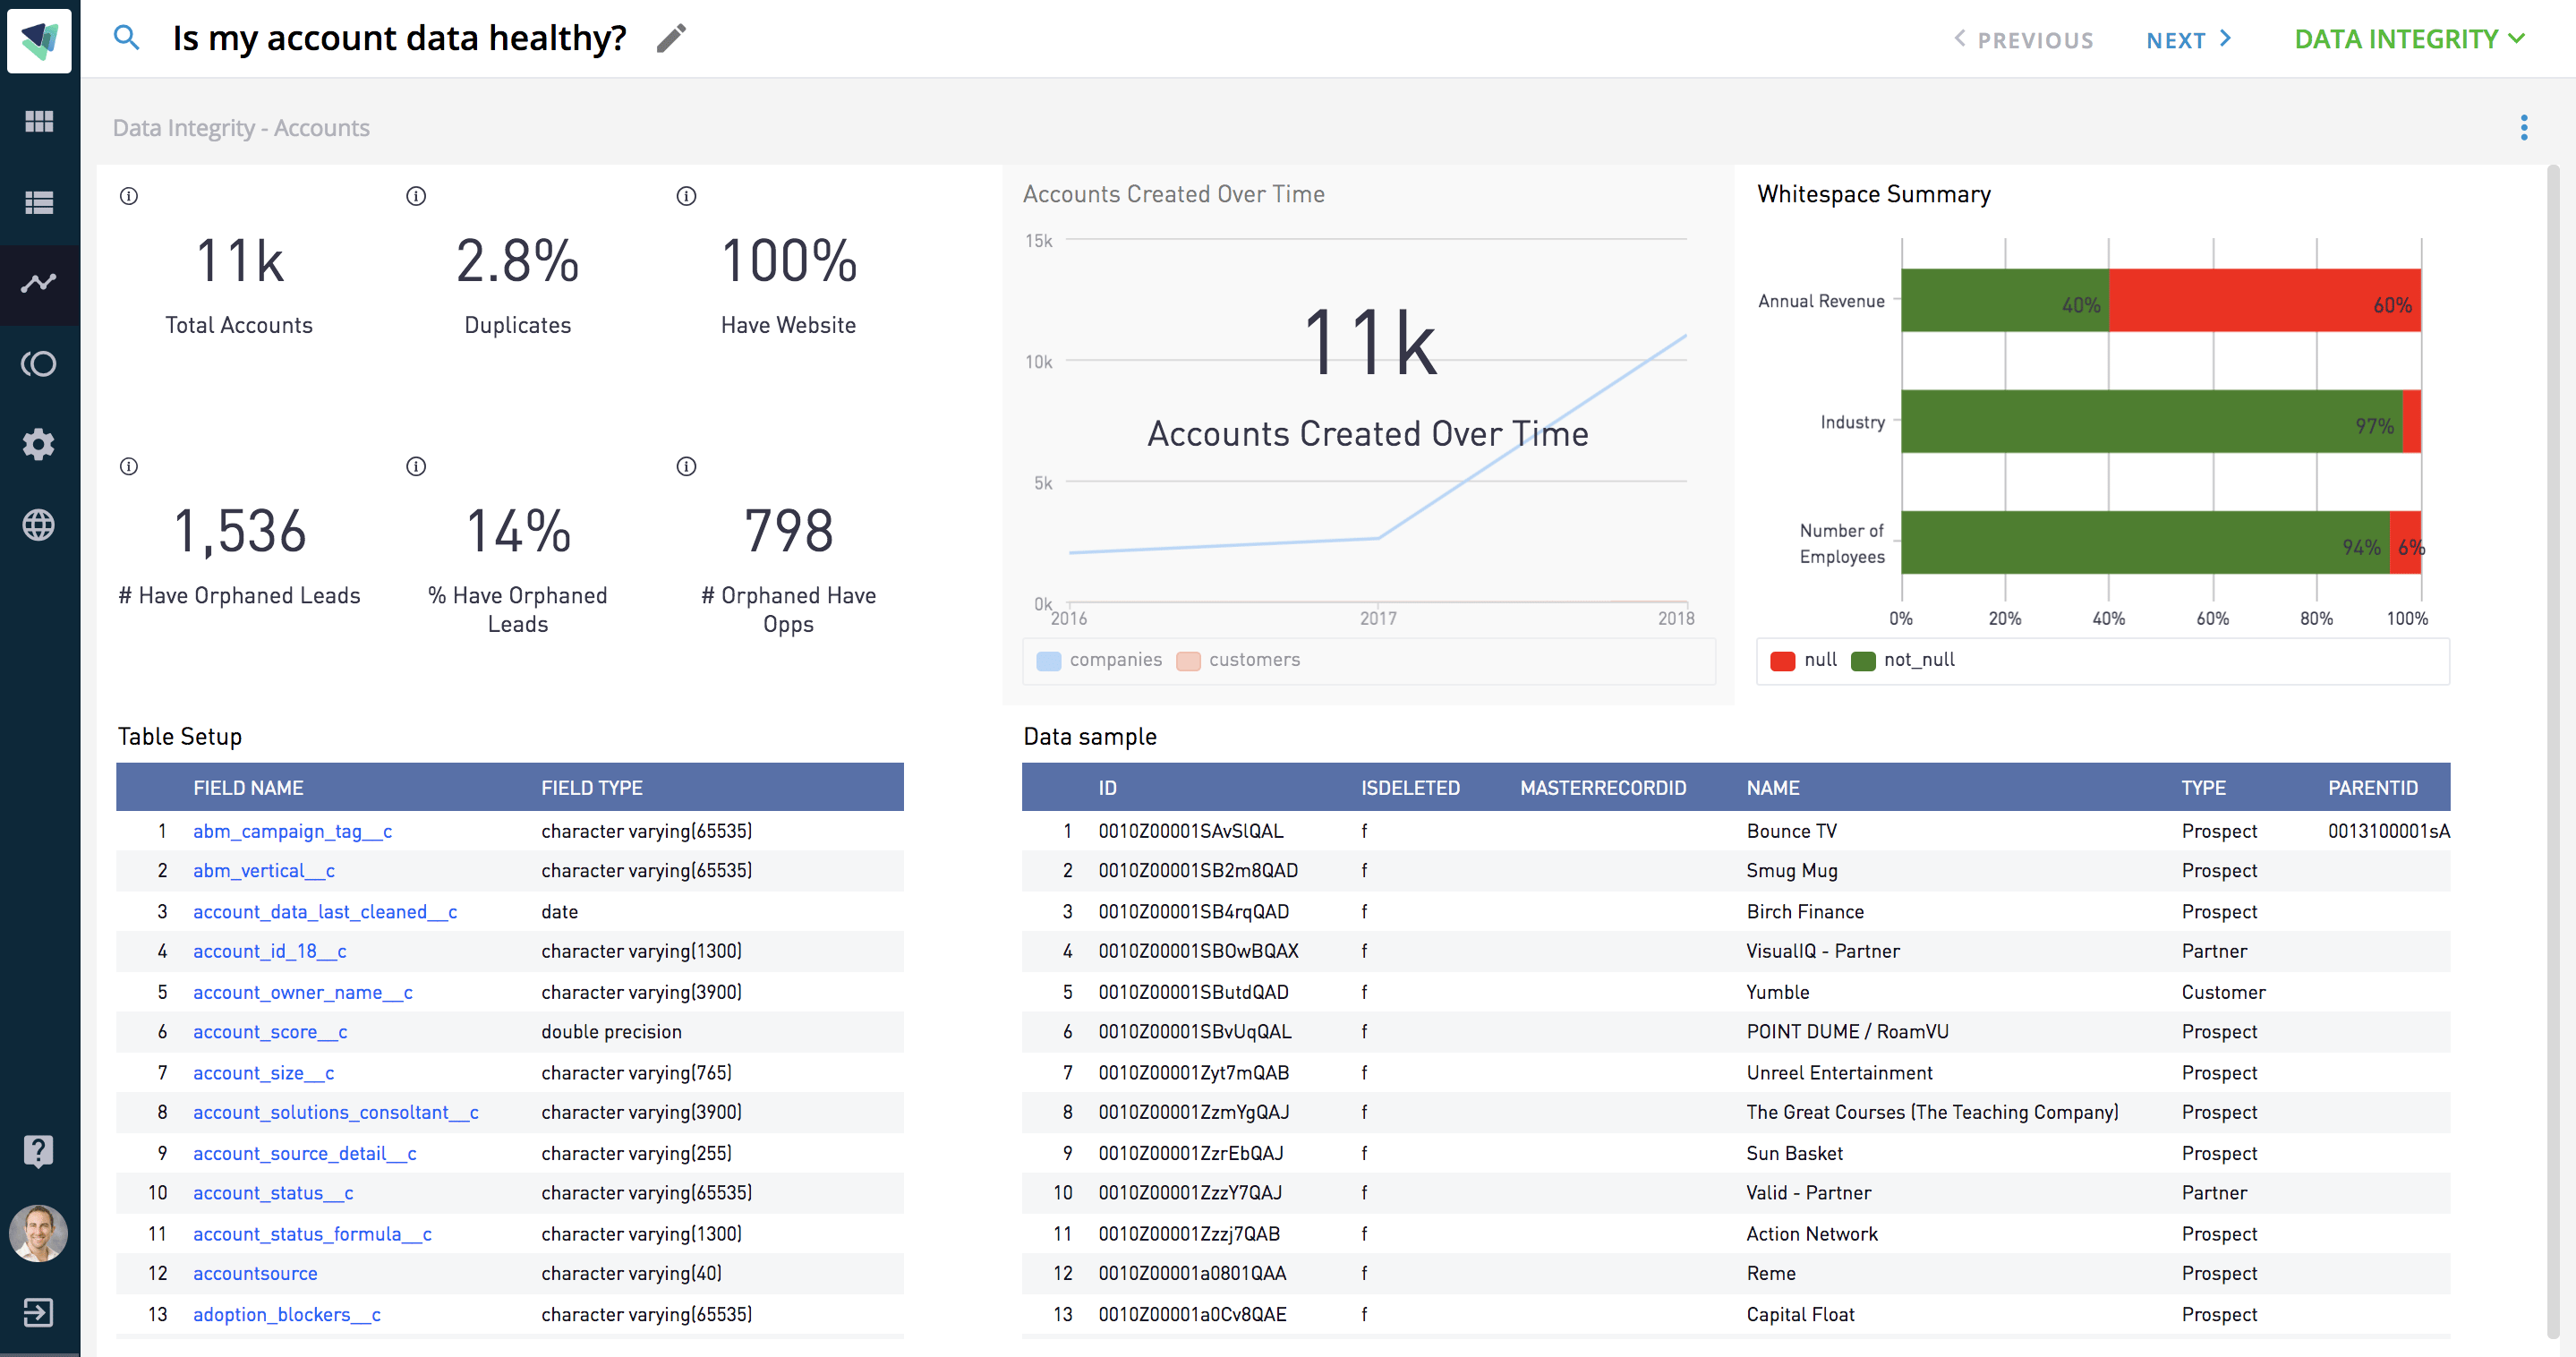 CaliberMind Accounts Data Integrity Report